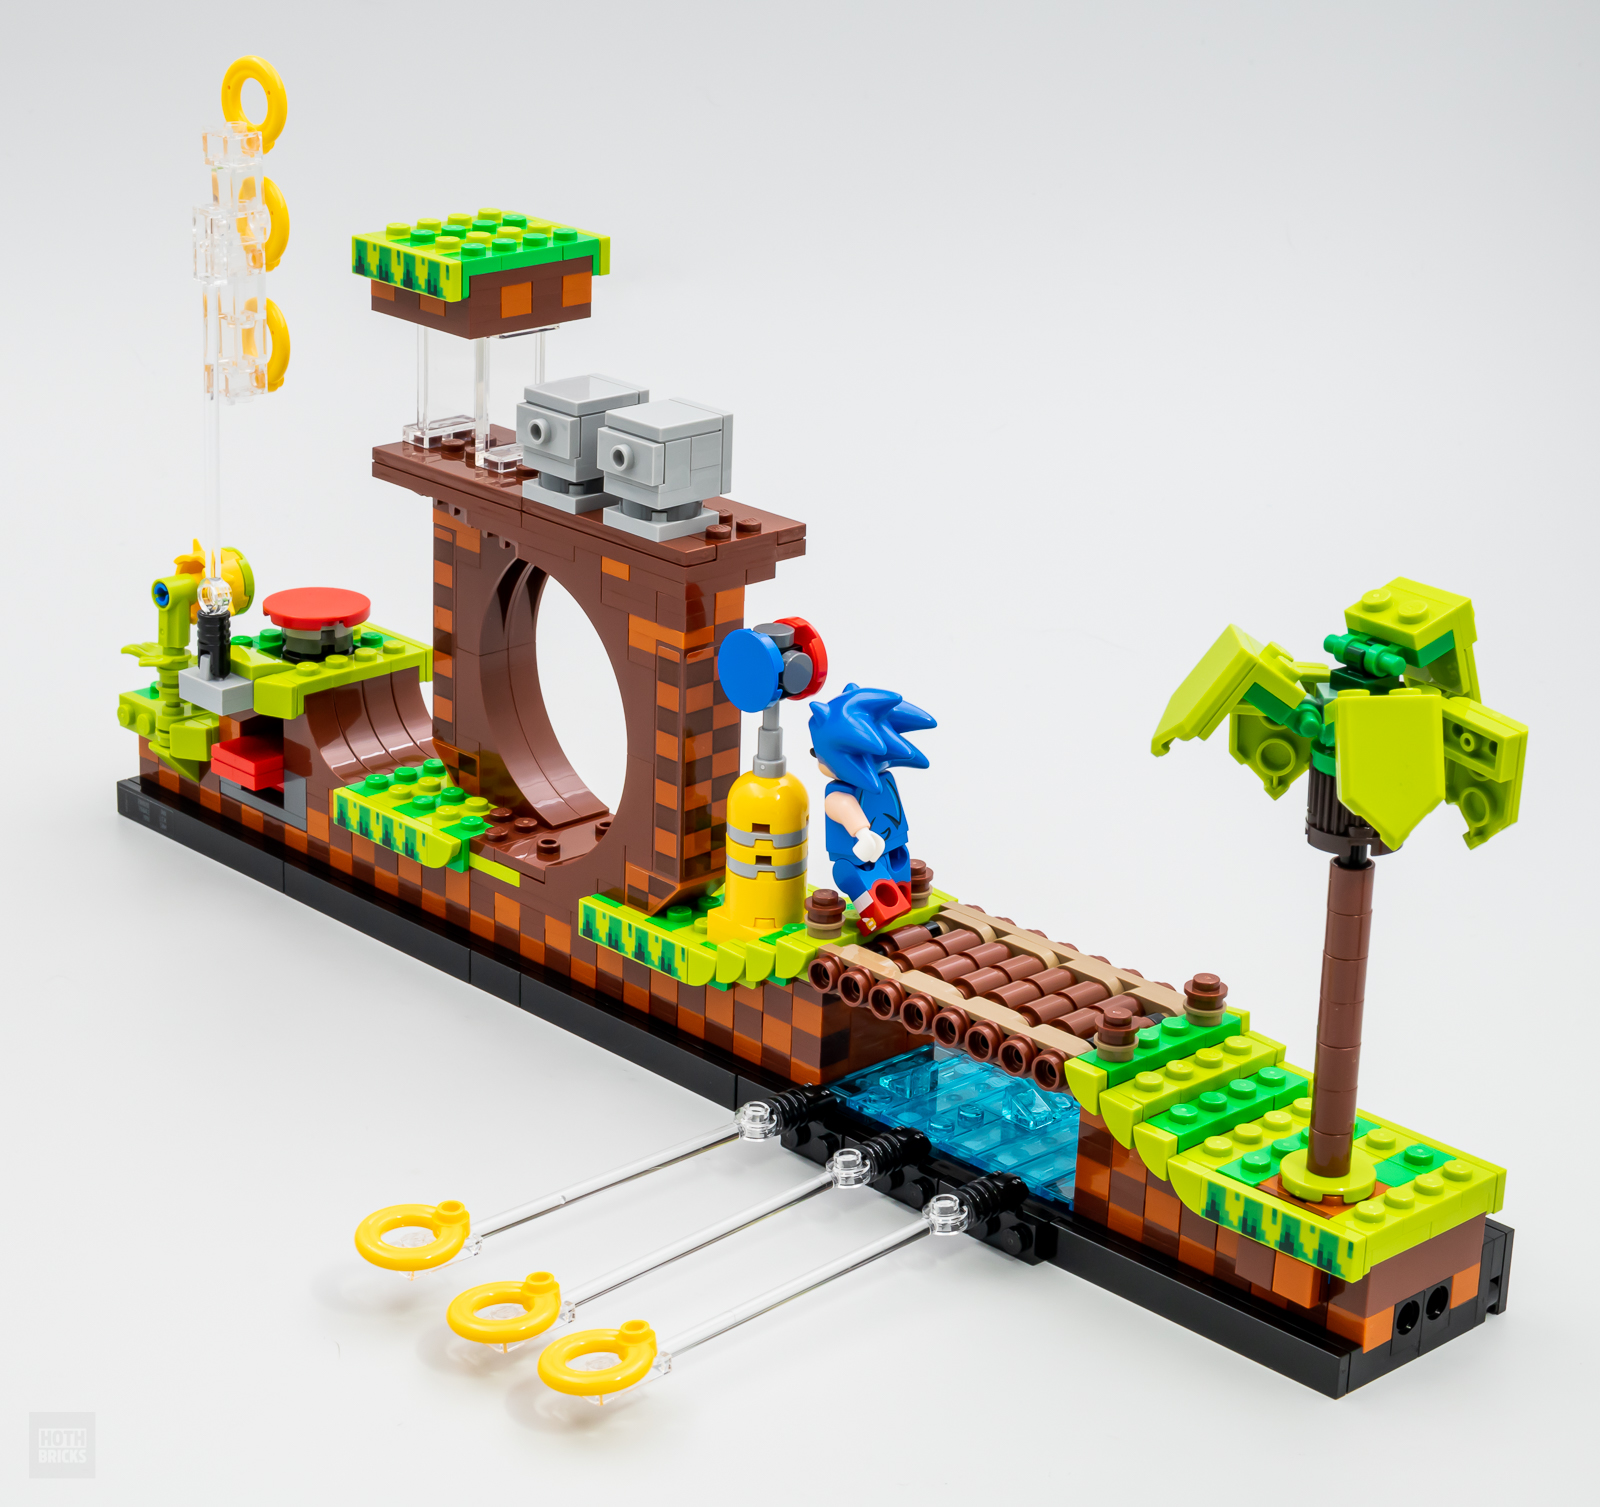 LEGO Ideas Sonic the Hedgehog - Green Hill Zone Set 21331